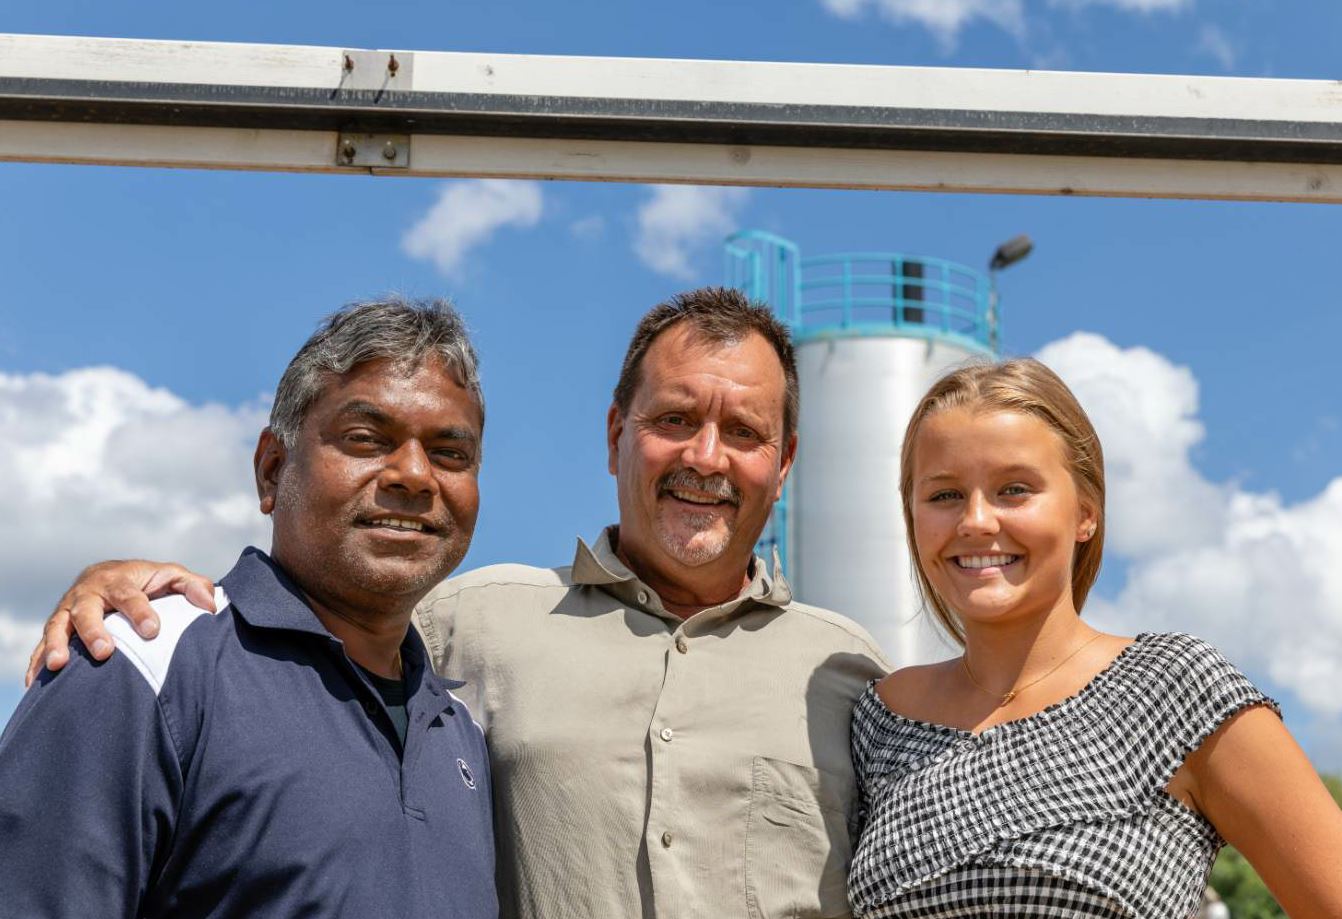 From left: Quality Control Supervisor Nate Voriganti, President Jeff Kresnak, and Jeff’s youngest daughter Sara Kresnak